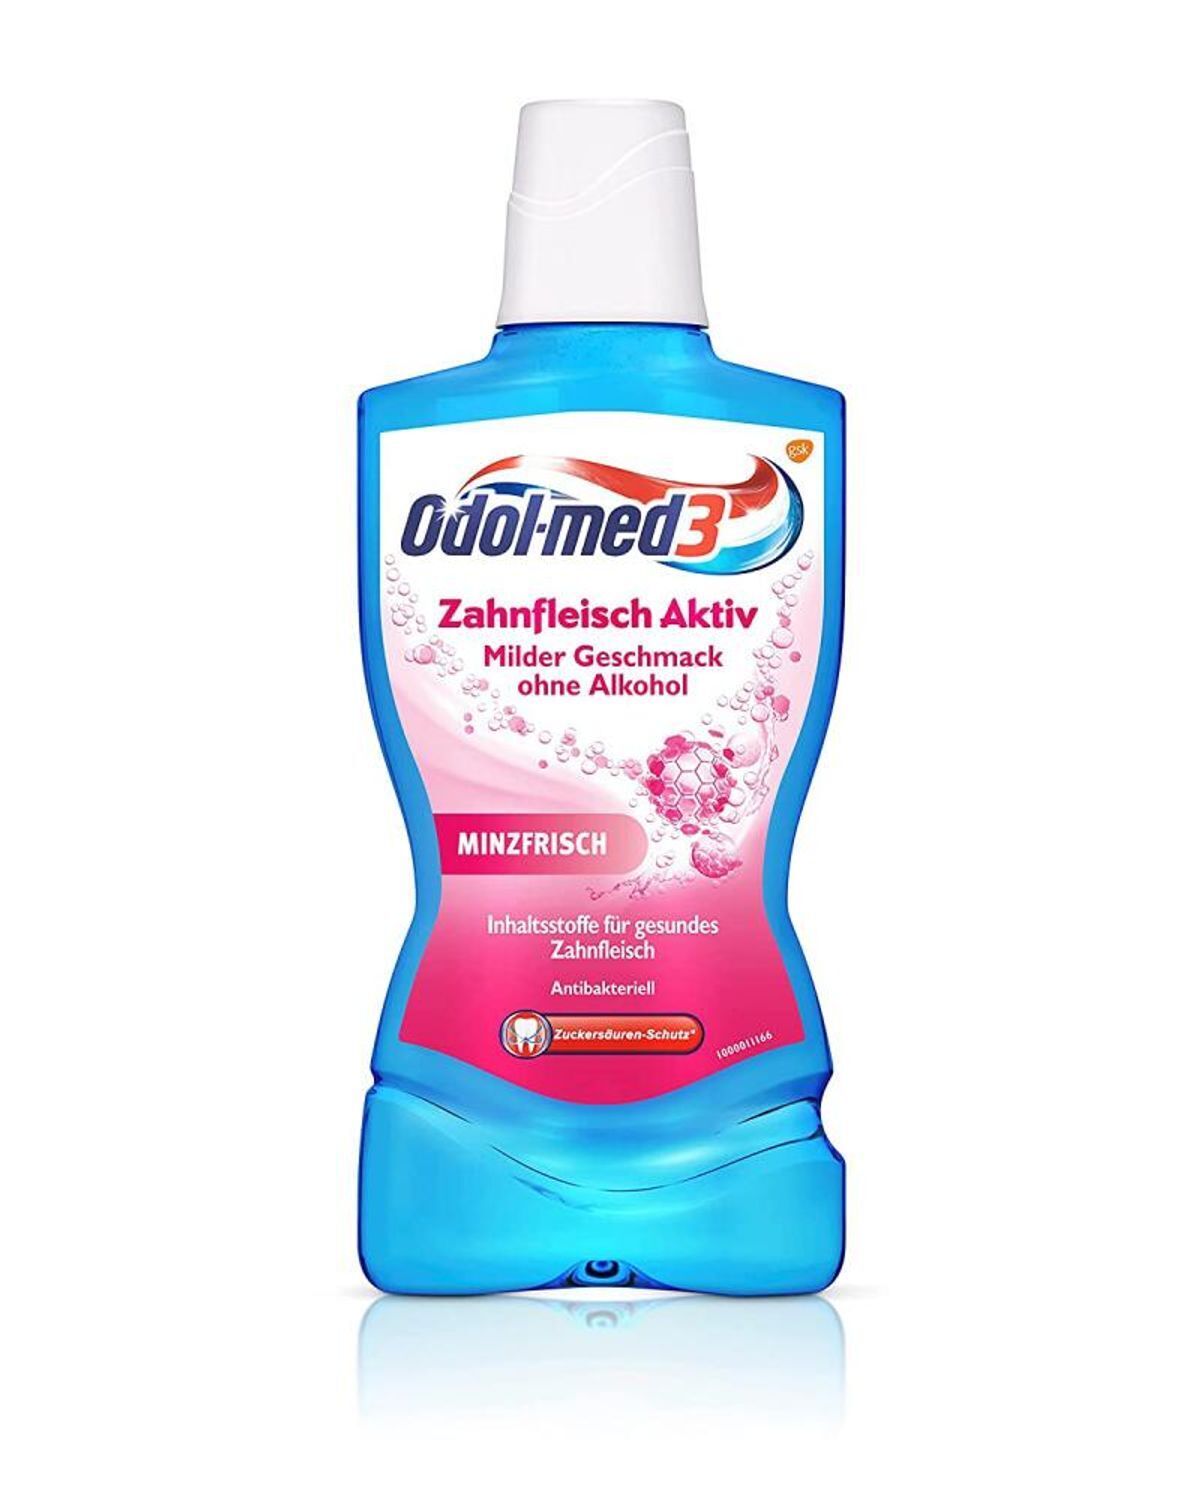 Odol-Med3 Mint Fresh Gums Active Mild Taste Alcohol Free RRP 4.49 CLEARANCE XL 3.99